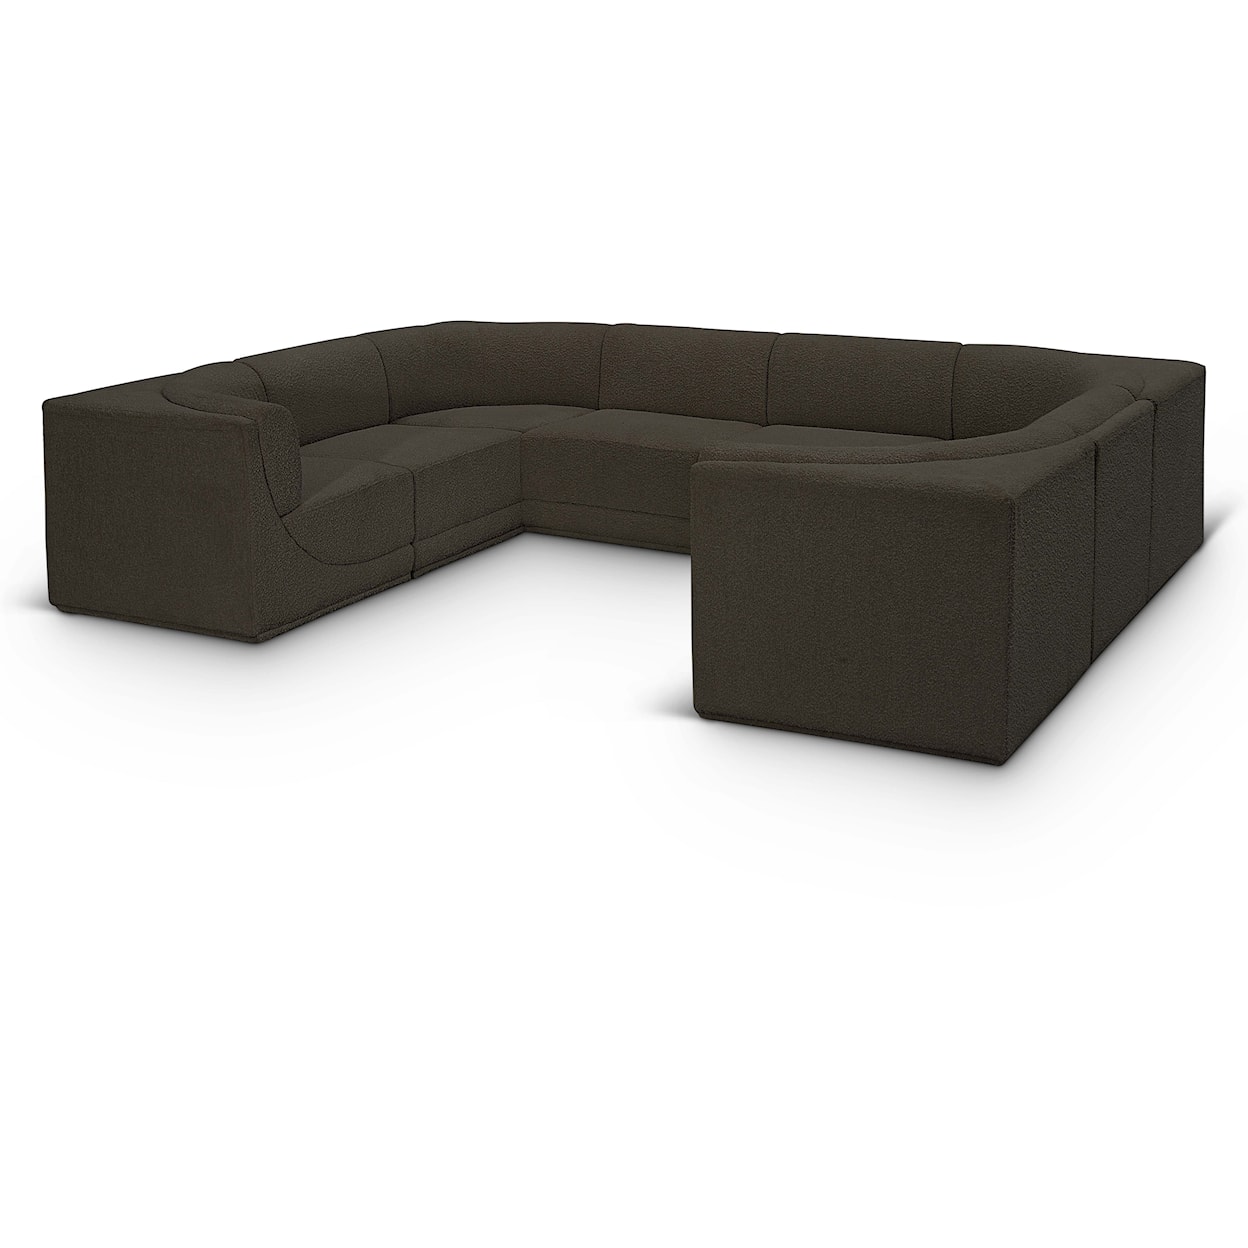 Meridian Furniture Ollie Modular Sectional